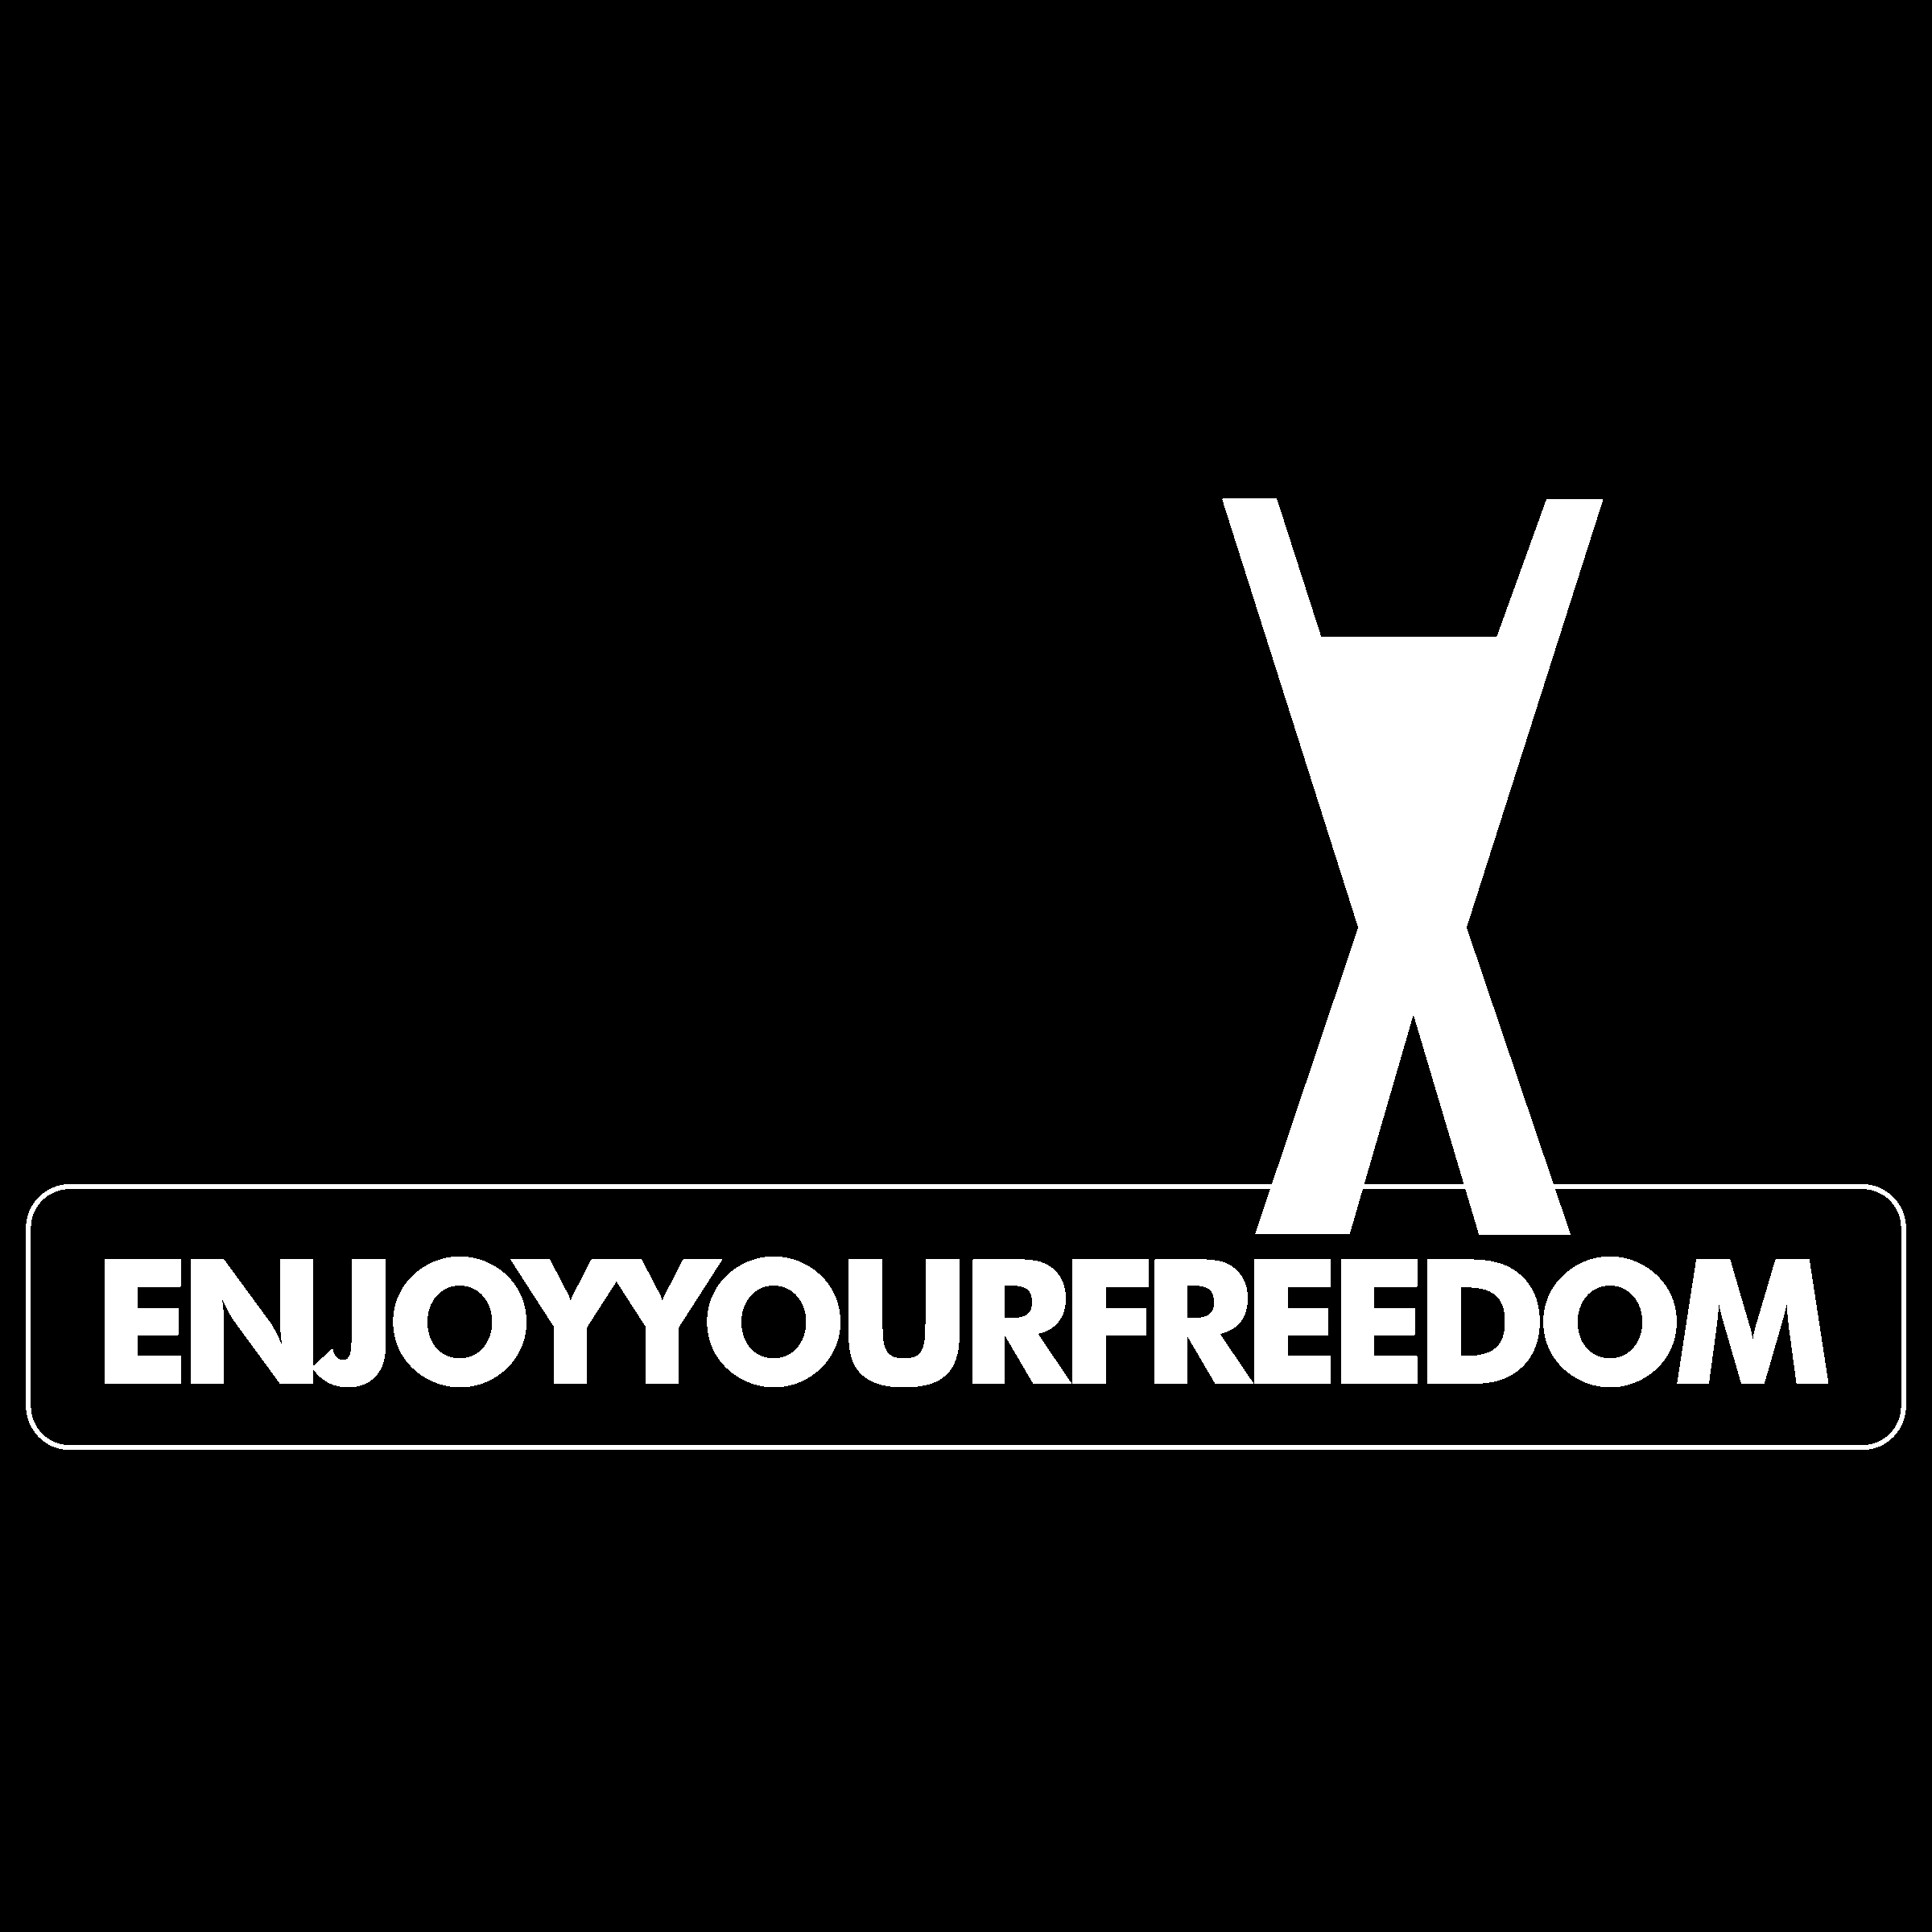 Freedom White Logo - Enjoy your Freedom Logo PNG Transparent & SVG Vector - Freebie Supply